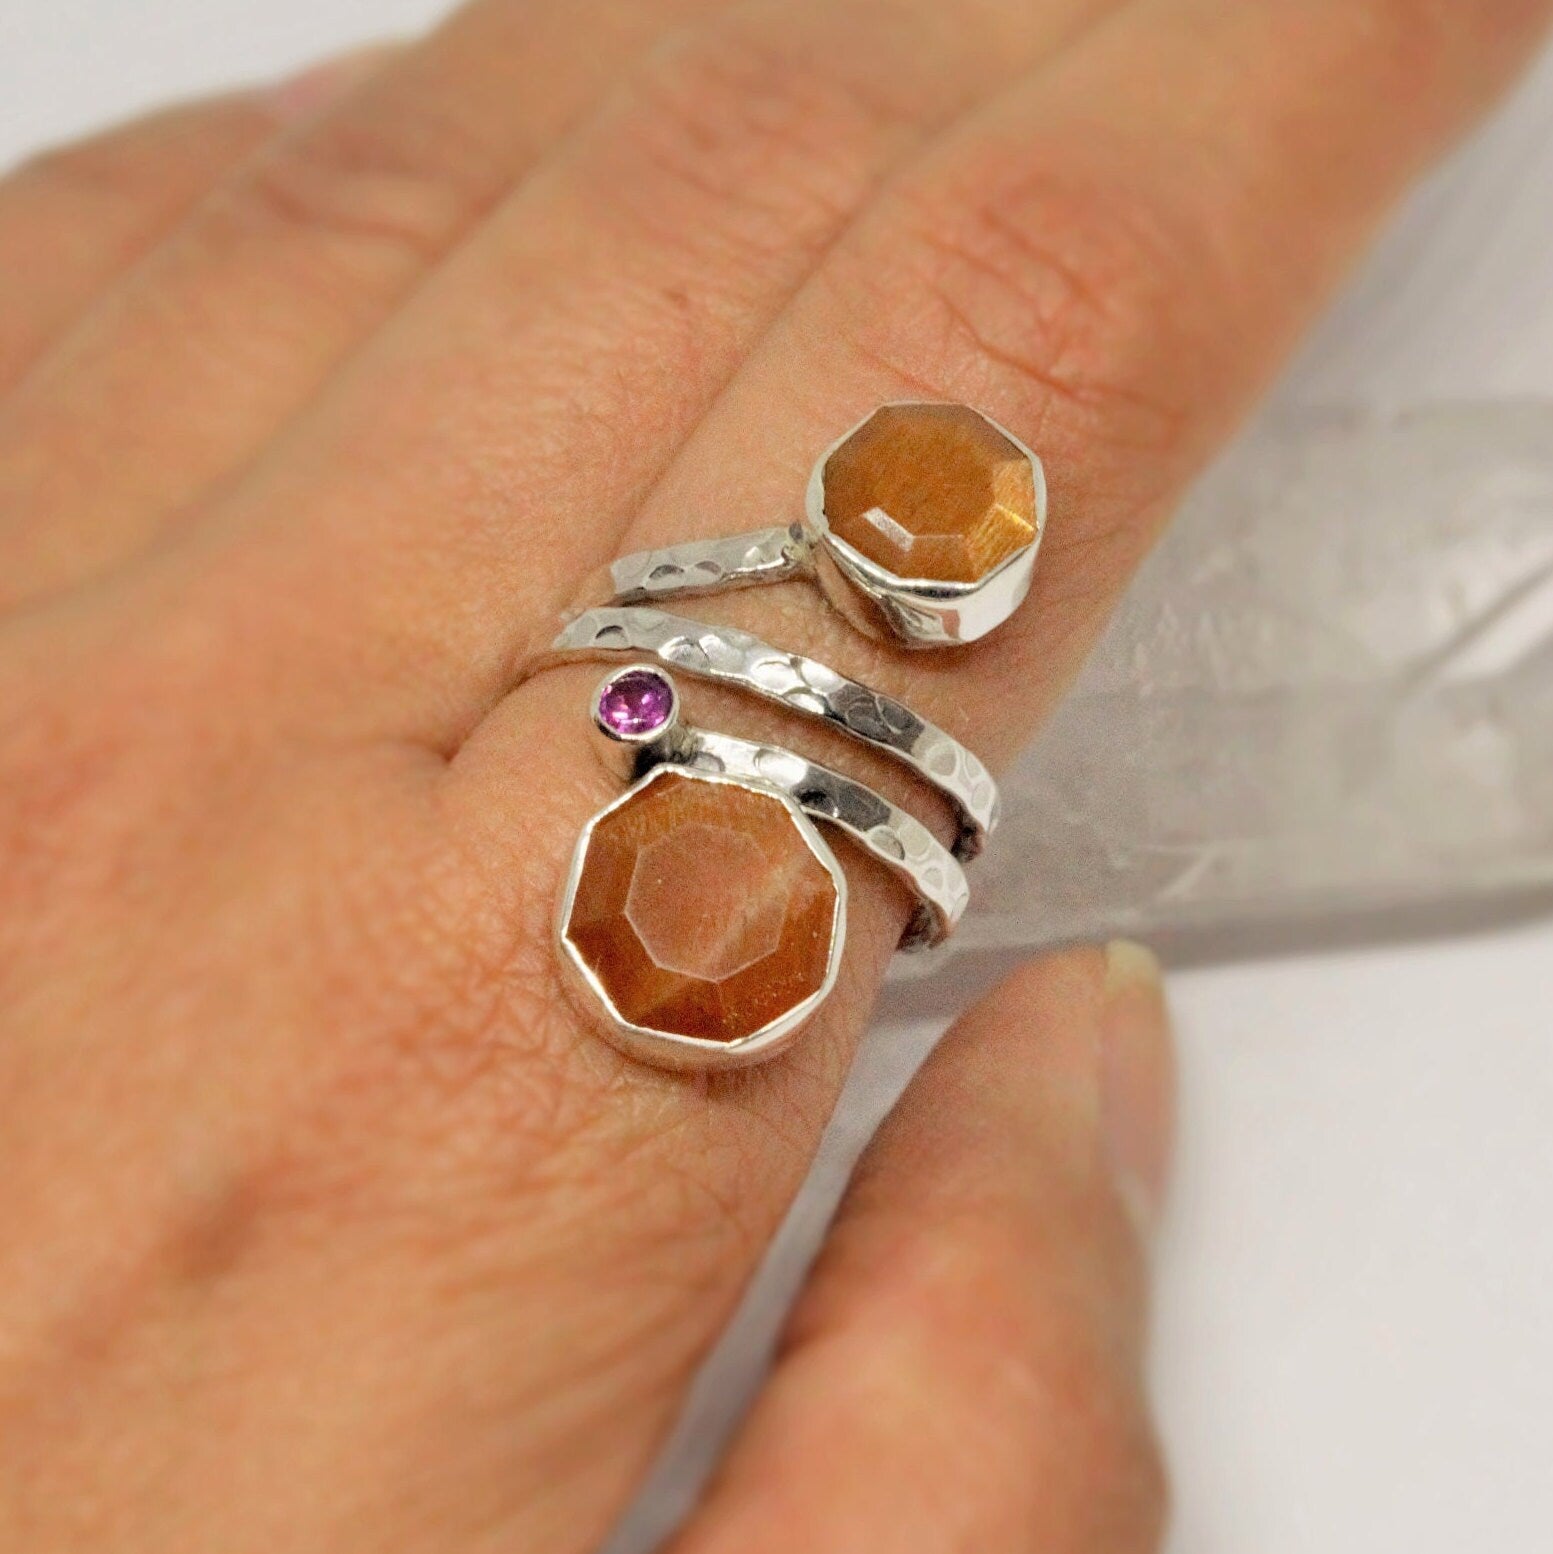 Sandstone, Garnet Sterling Silver Ring, UK size M, January Birthstone Ring, Dainty Gemstone Statement Ring, Birthday Gift, Gifts For Her